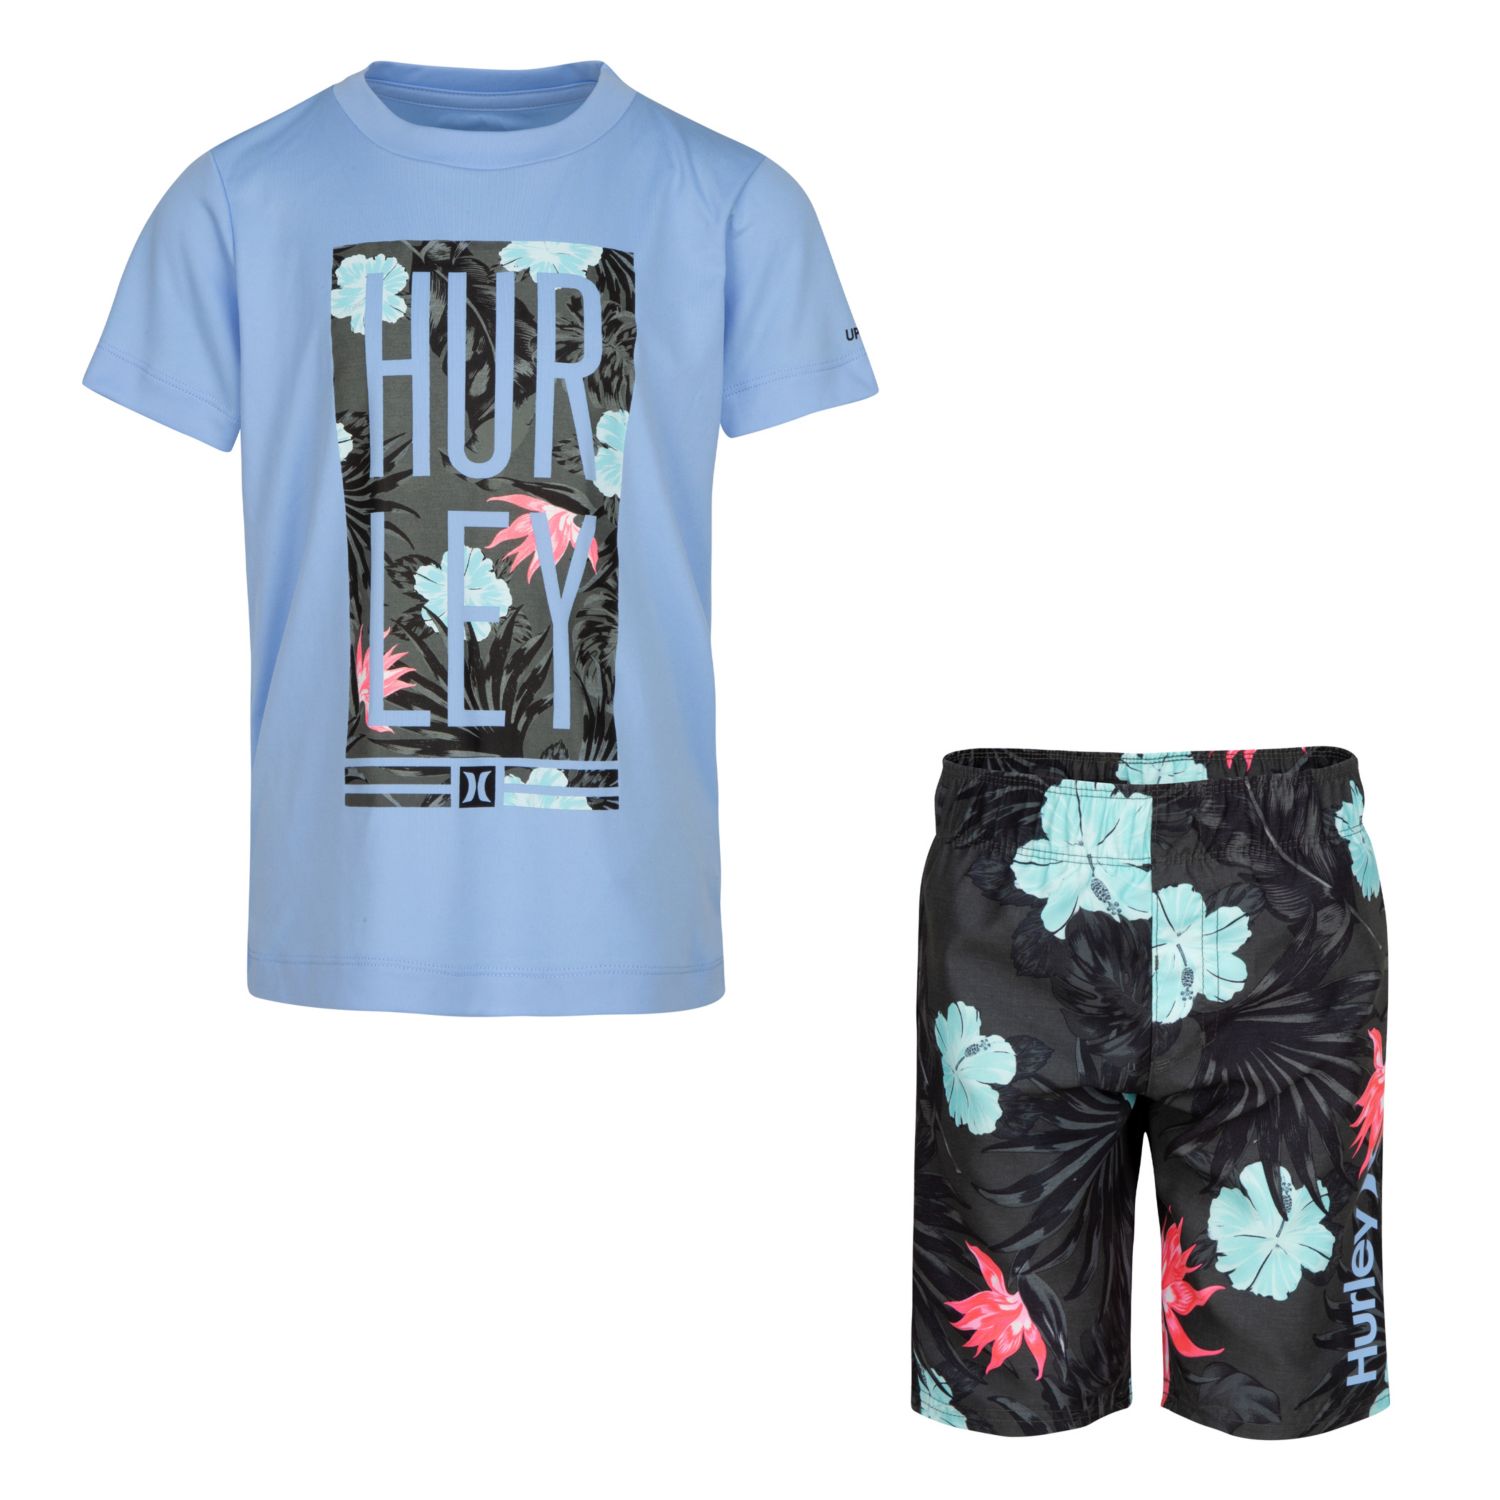 Image for Hurley Boys 4-7 Dri-FIT UPF 50+ Tropical Top & Board Shorts Set at Kohl's.